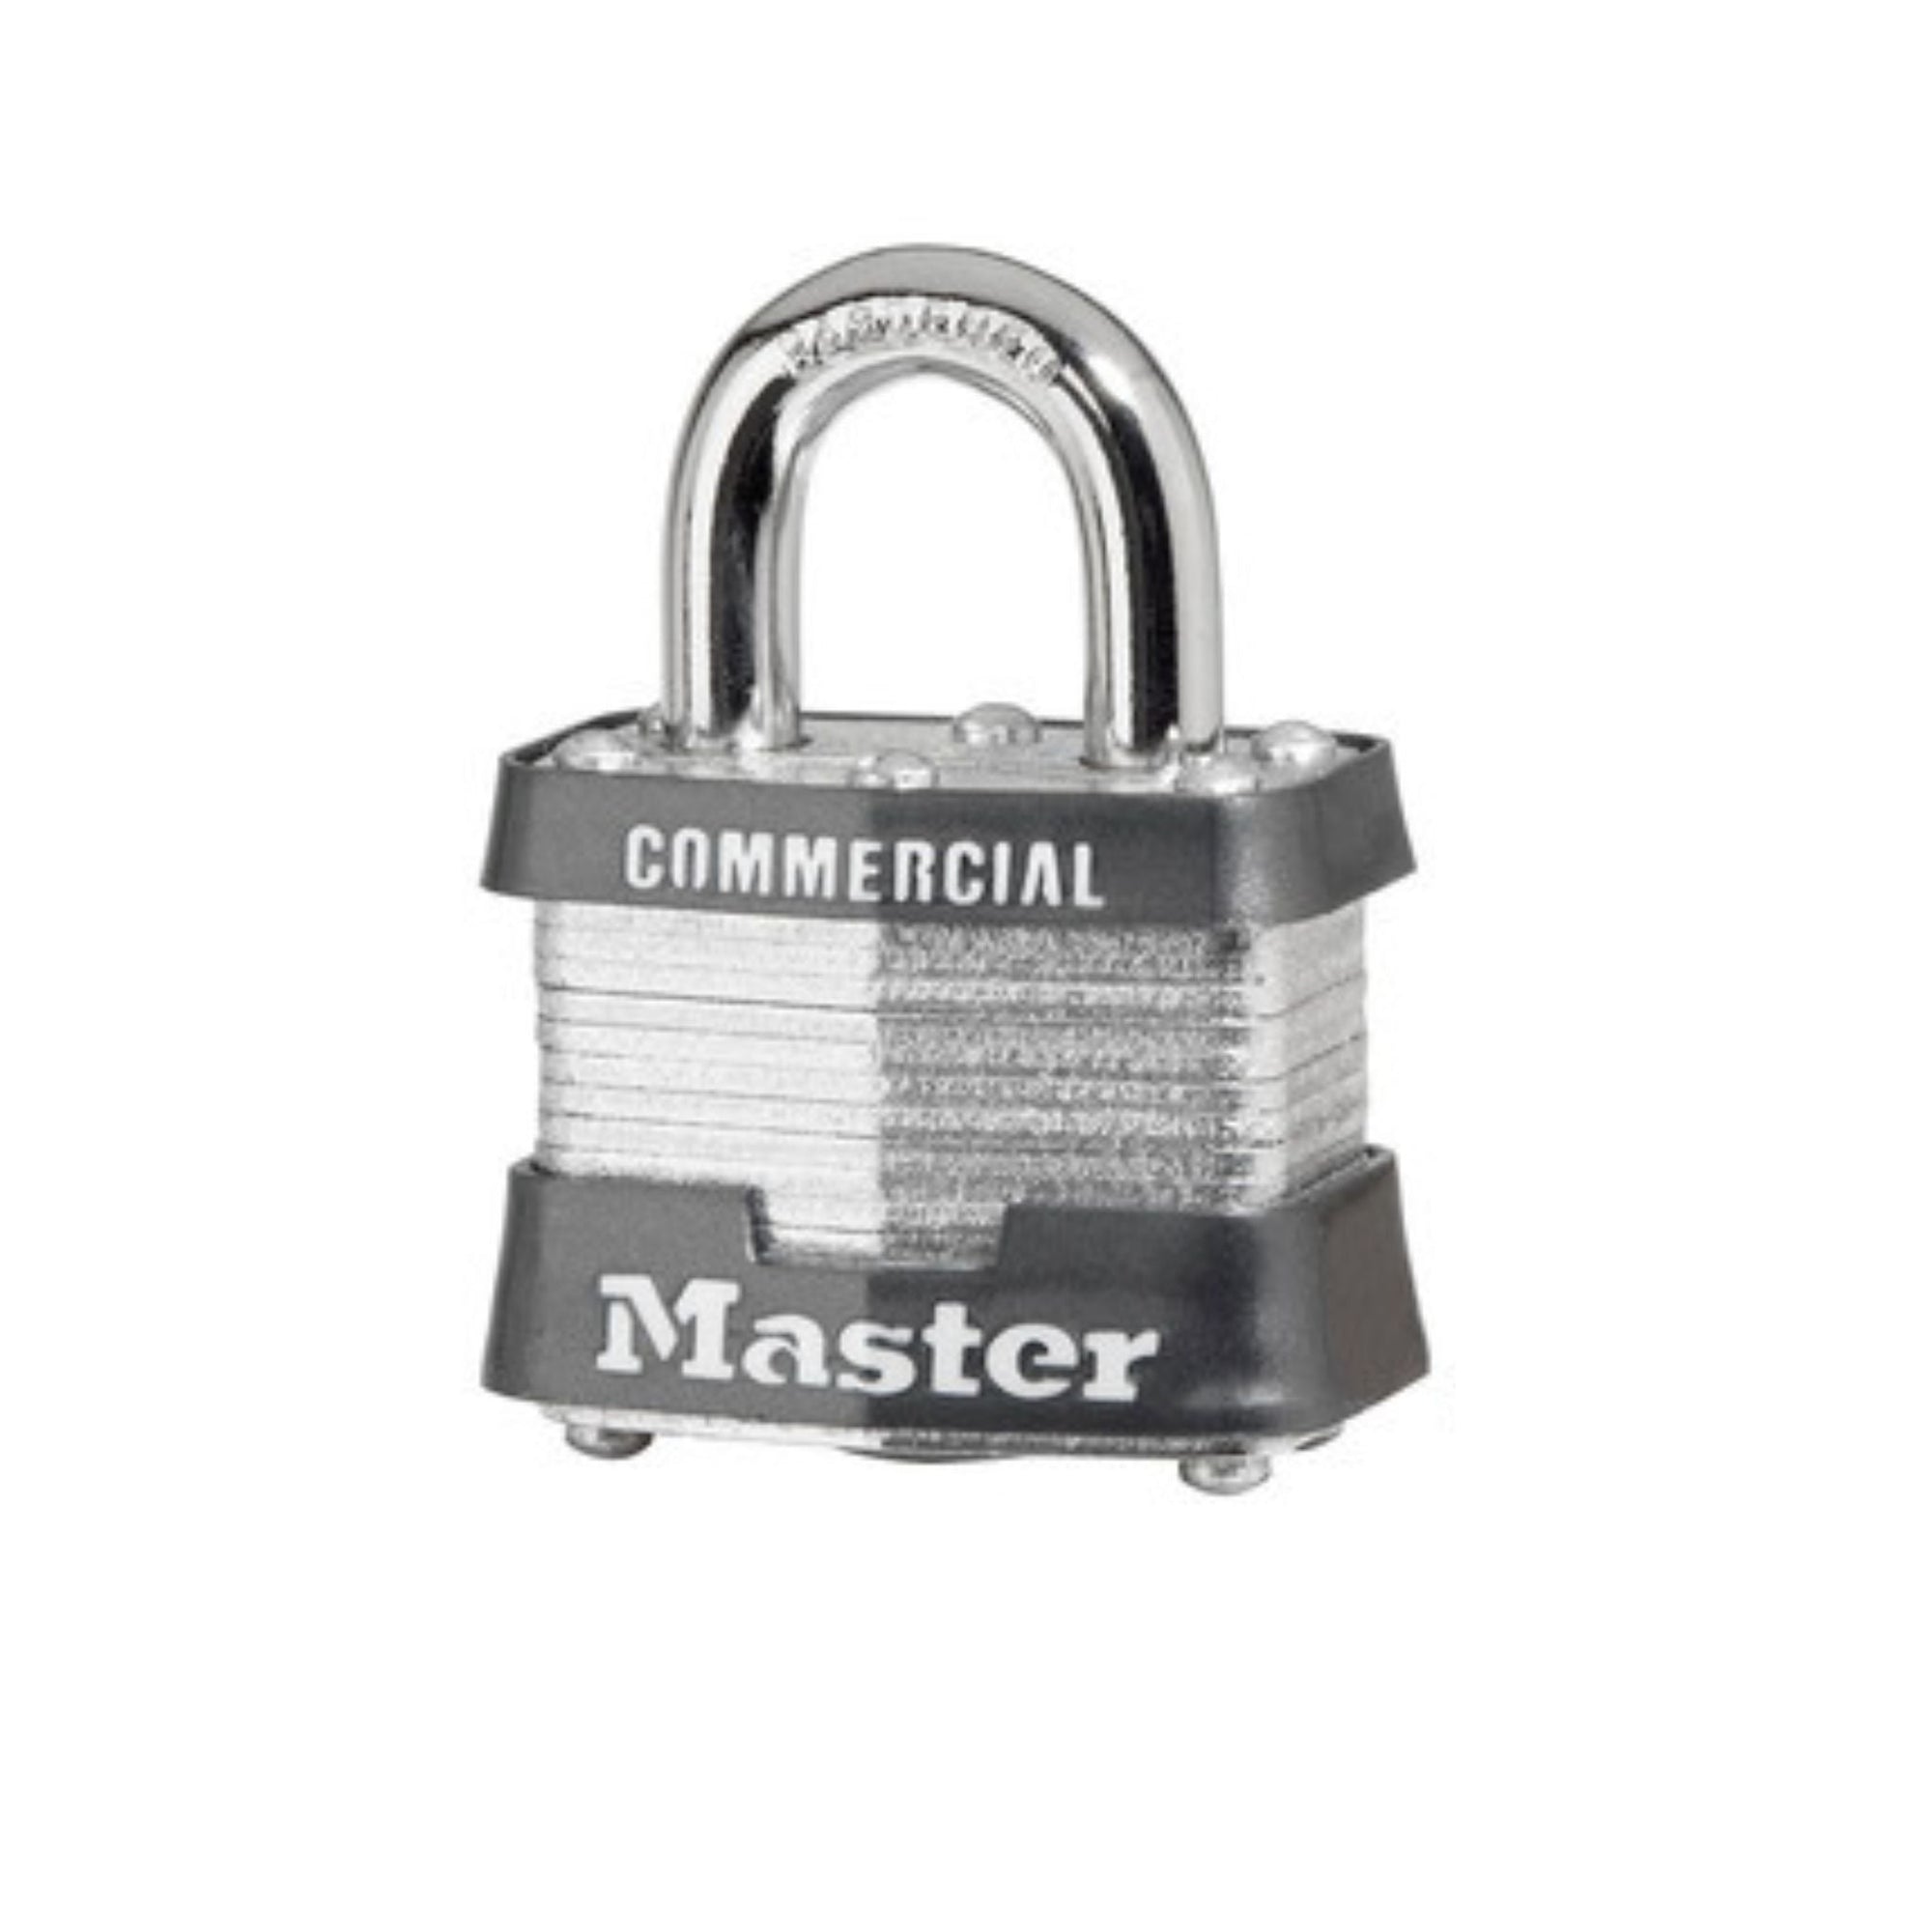 Master Lock 3KA 0310 Lock Laminated steel No. 3 Series Padlock Keyed to Match Existing Key Number KA0310 - The Lock Source